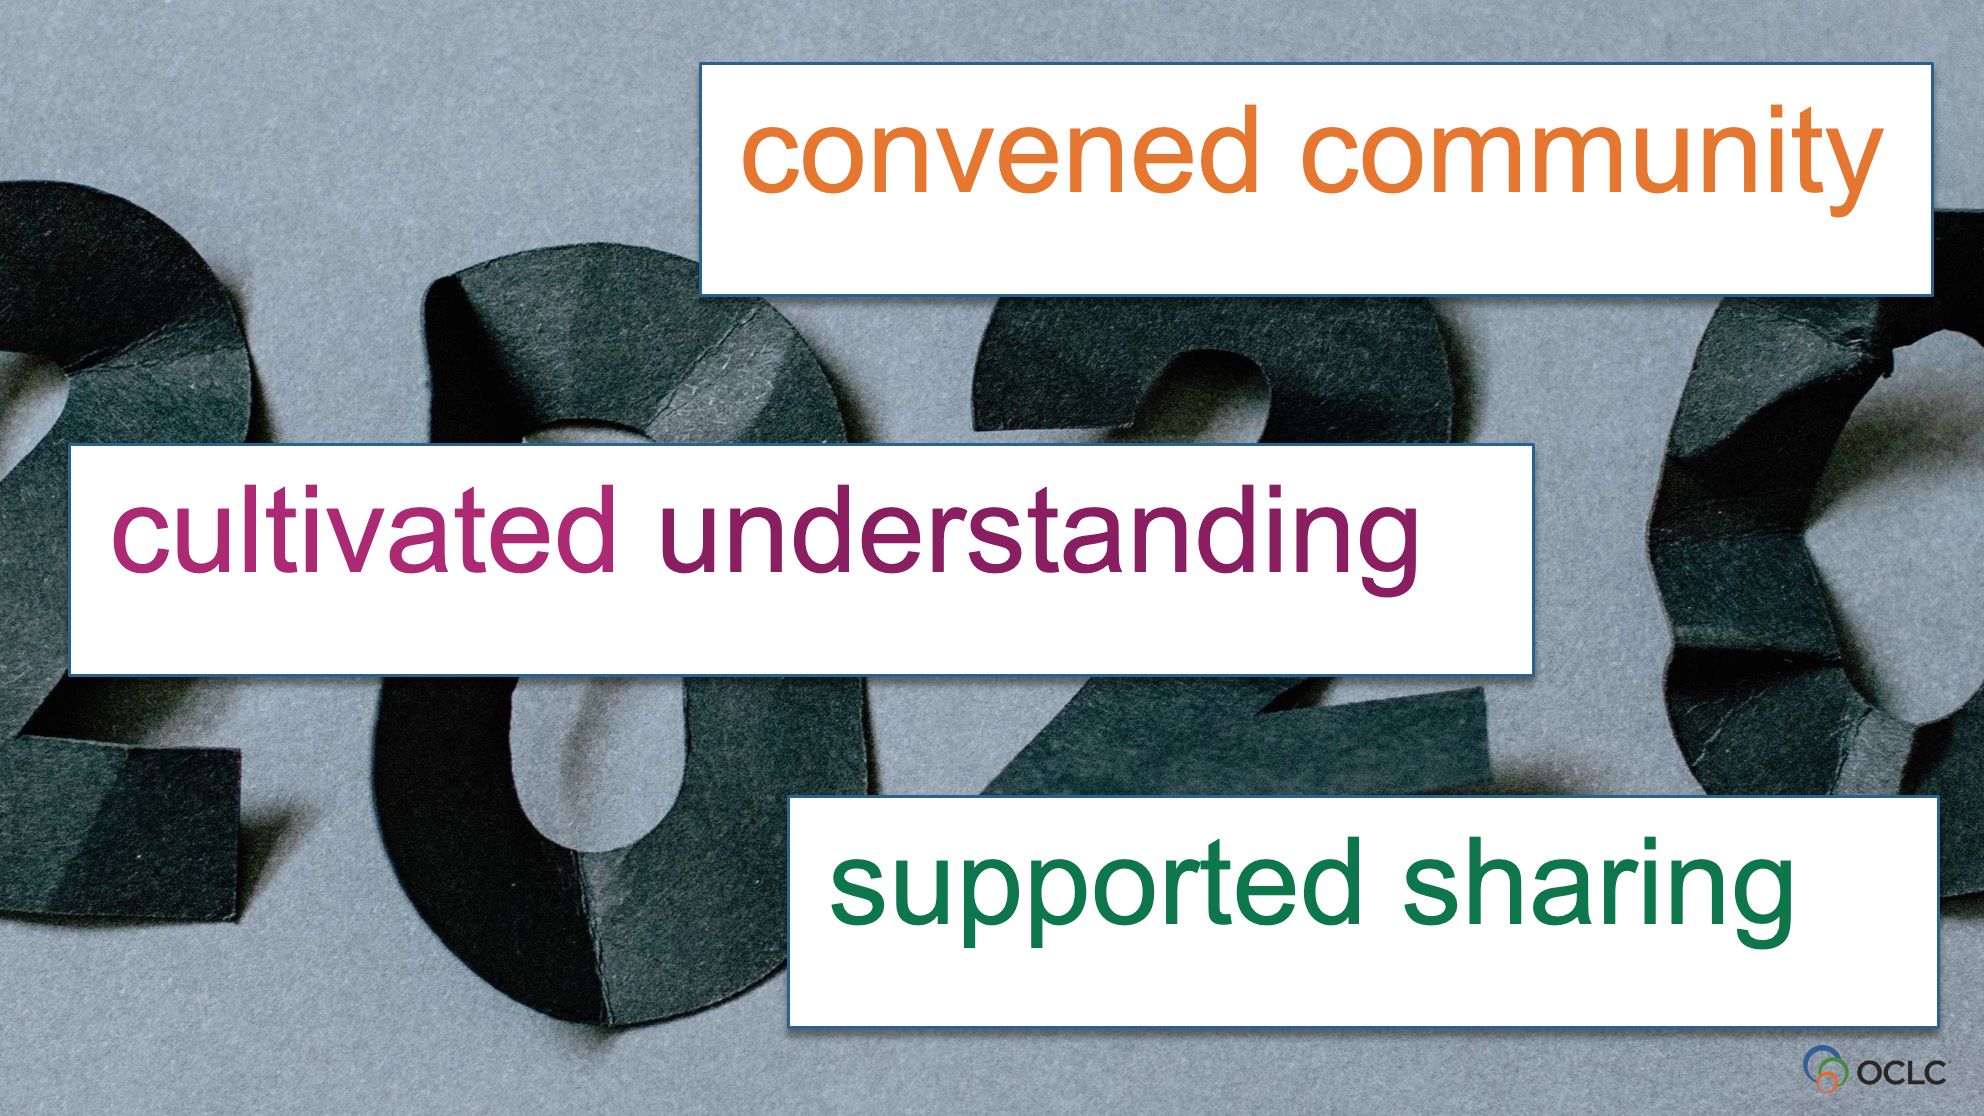 OCLC Research Update: Convening, understanding, and sharing